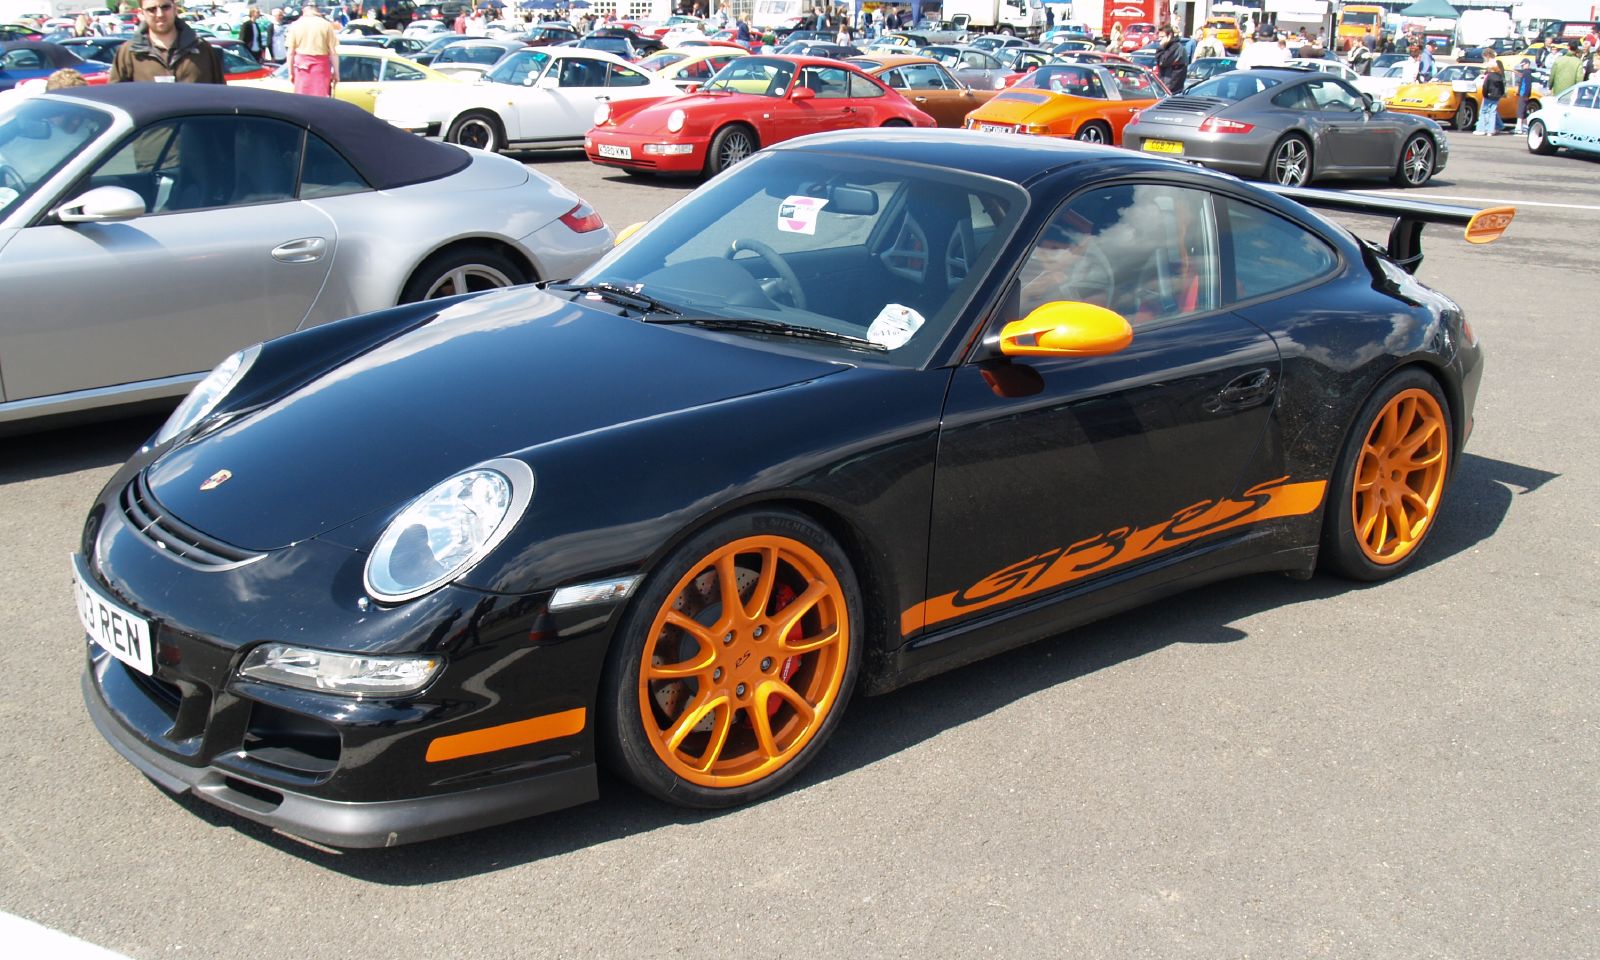 Porsche_997_GT3_RS_coup%C3%A9_black_orange_RHD.jpg